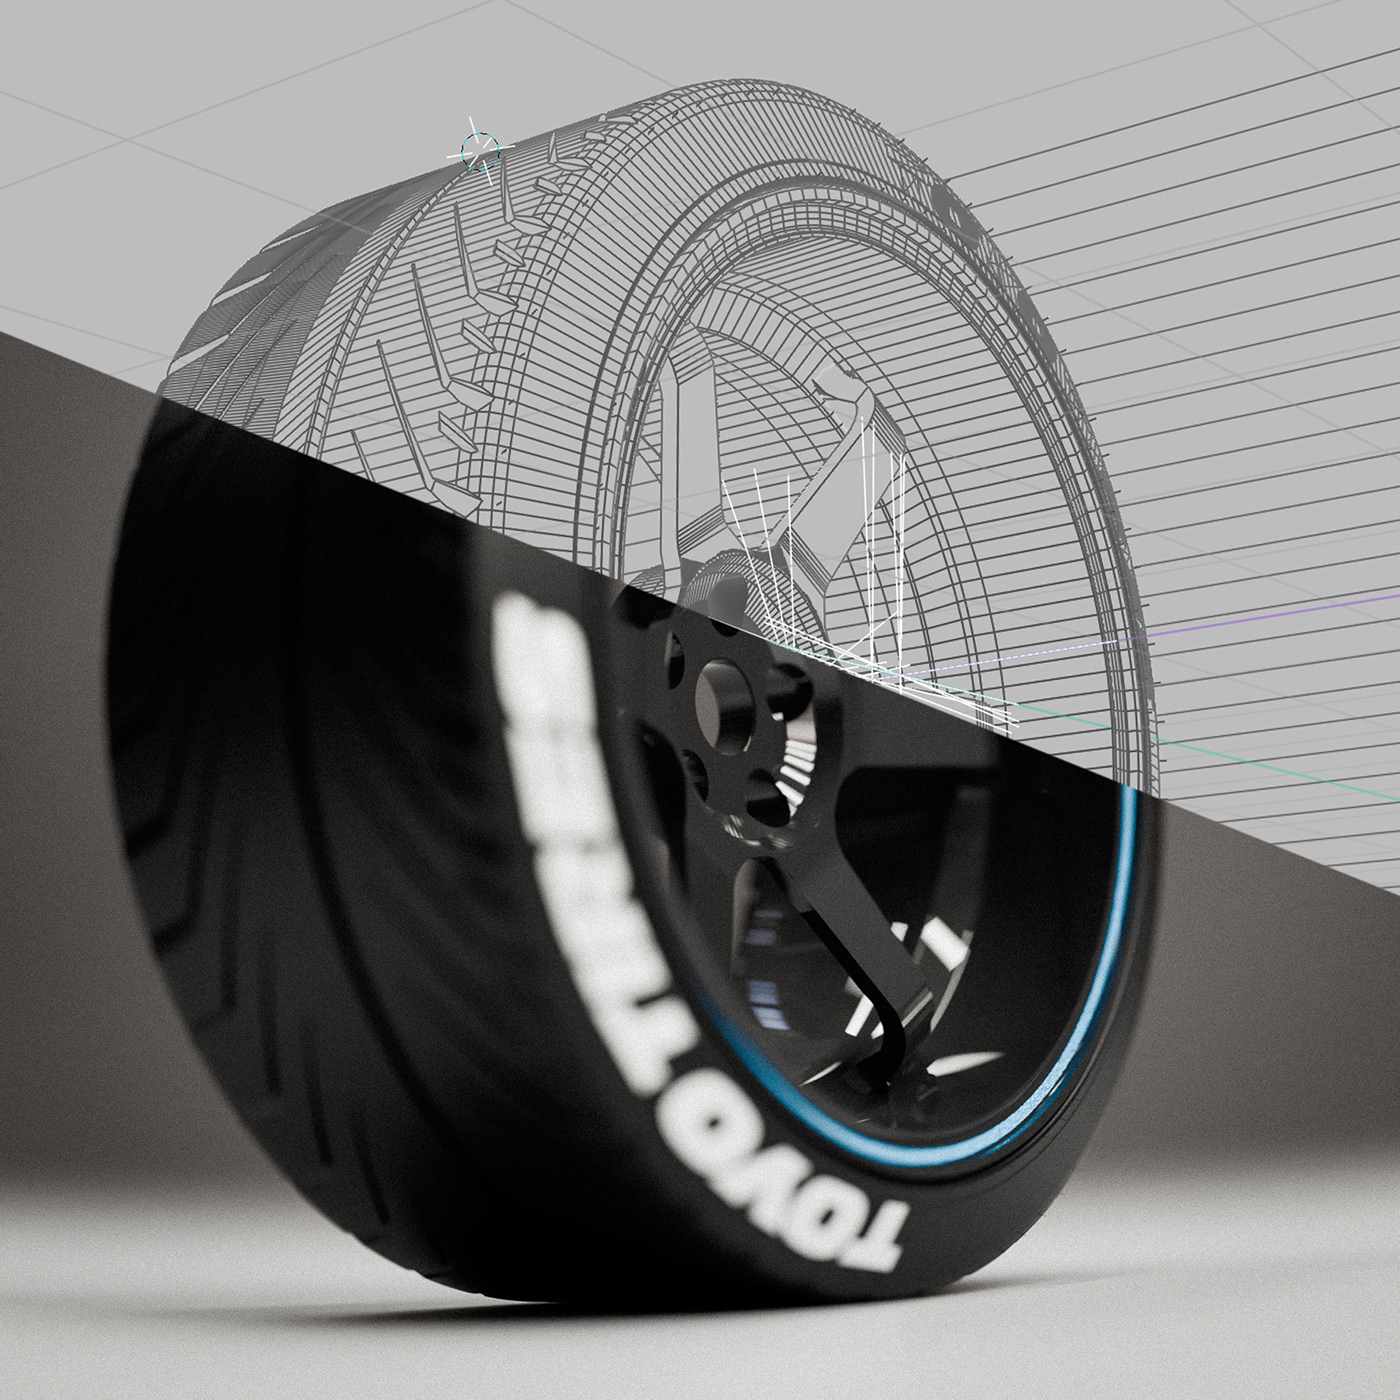 Te37 blender blender cycles blender3d Render 3D Cars automotive   Rims wheel